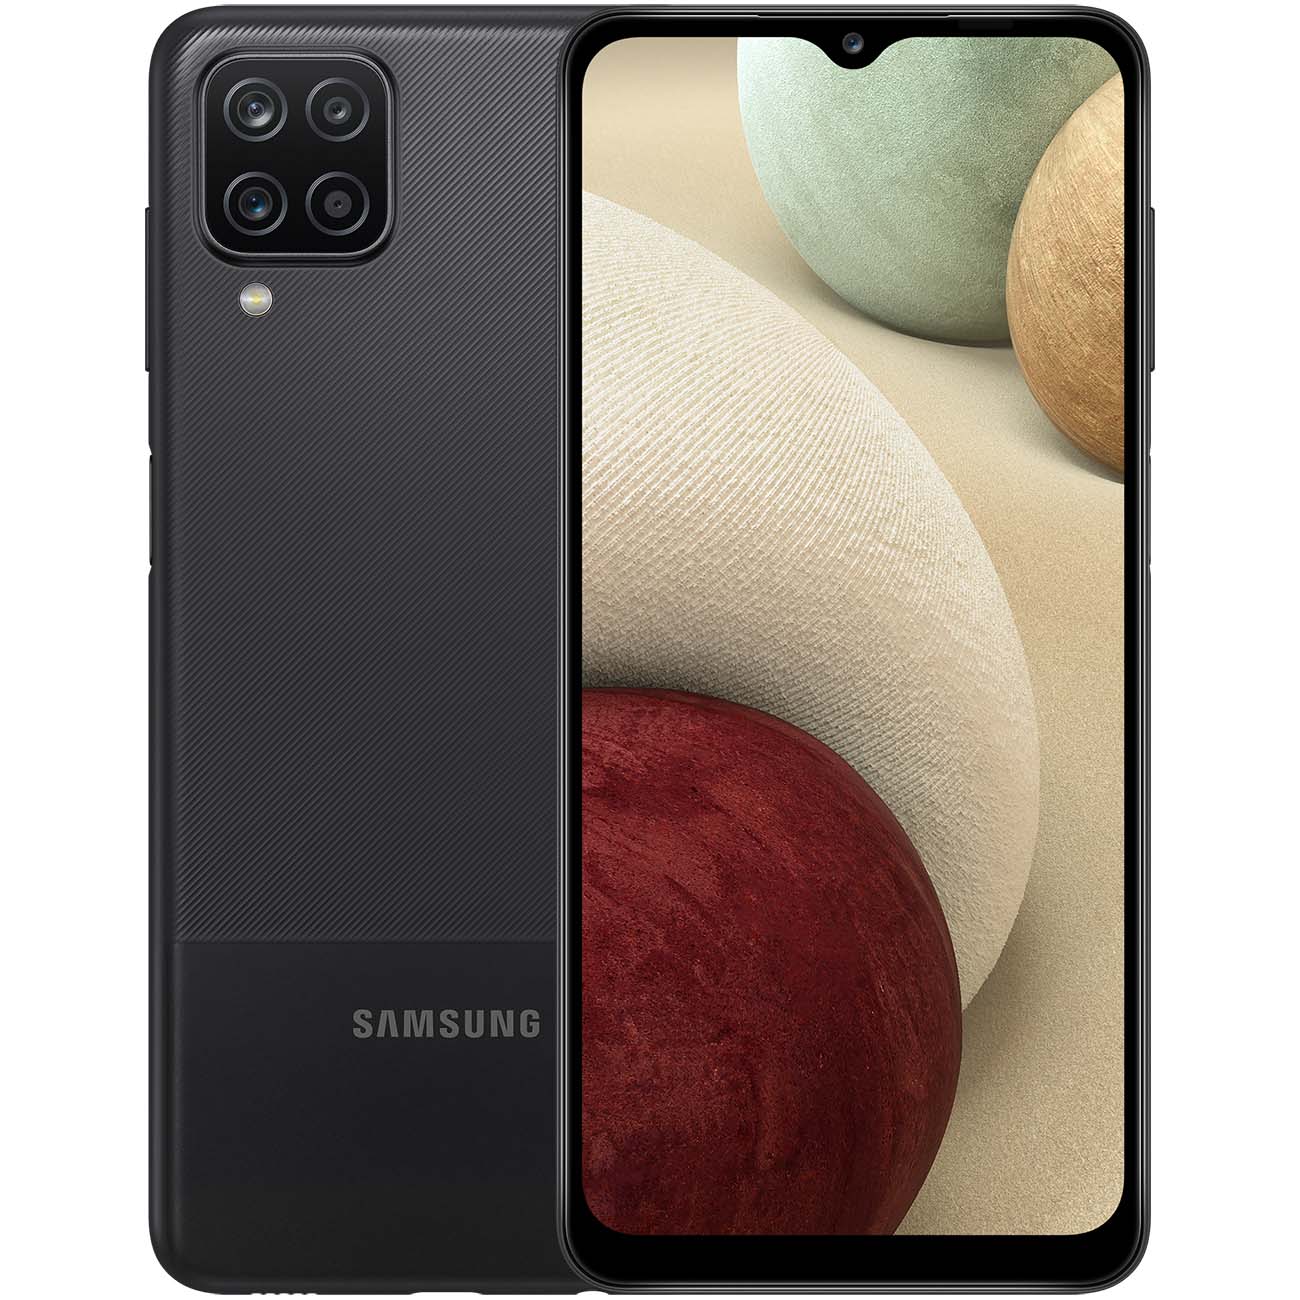 Телефон Samsung Galaxy A12 SM-A127F 32Gb черный РСТ